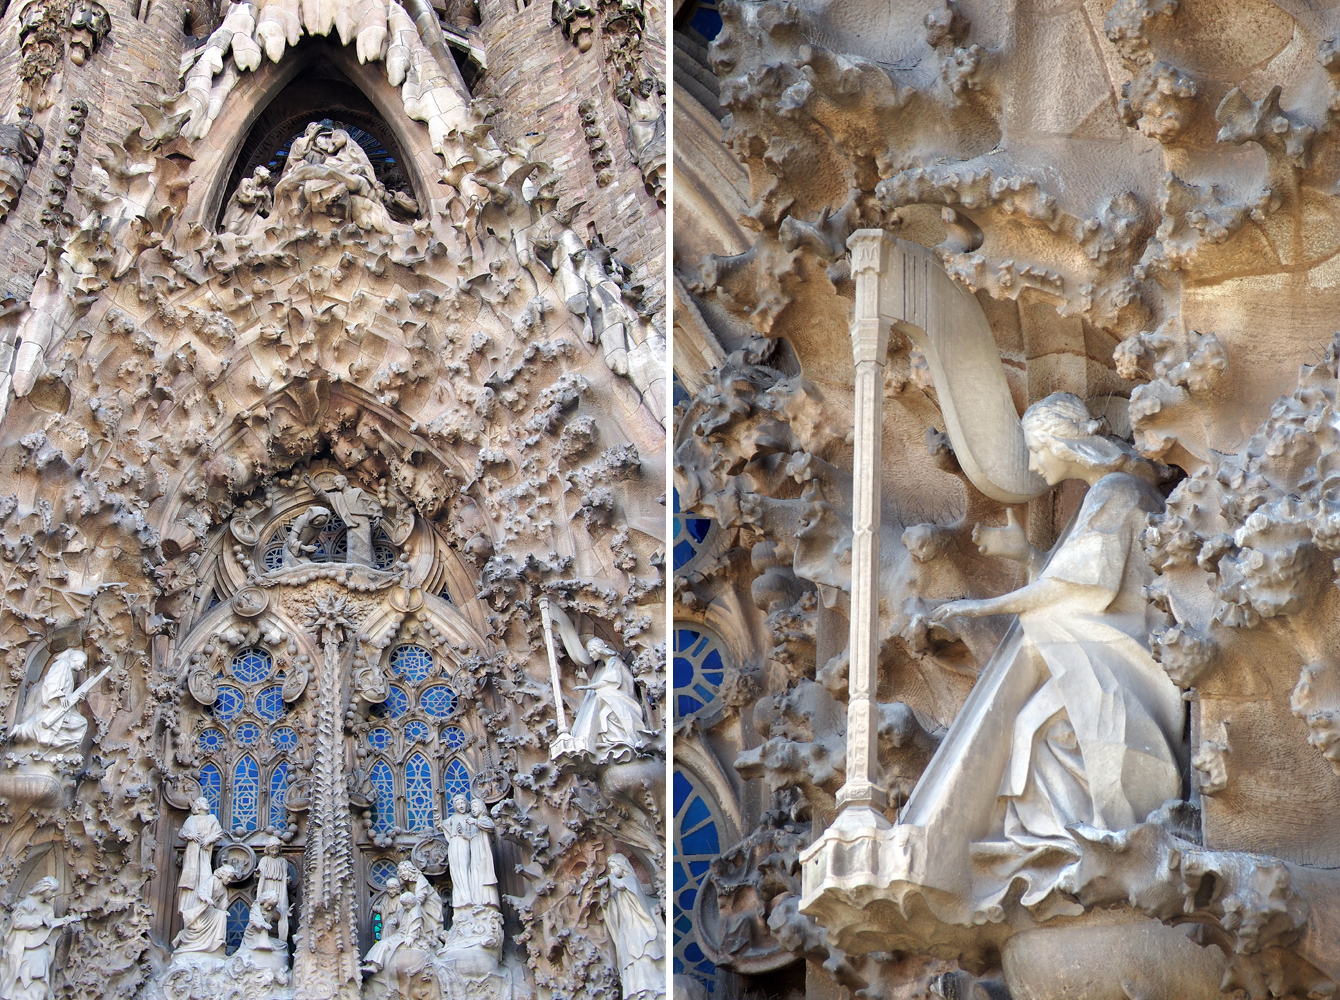 Sagrada Familia - "Fee ist mein Name"